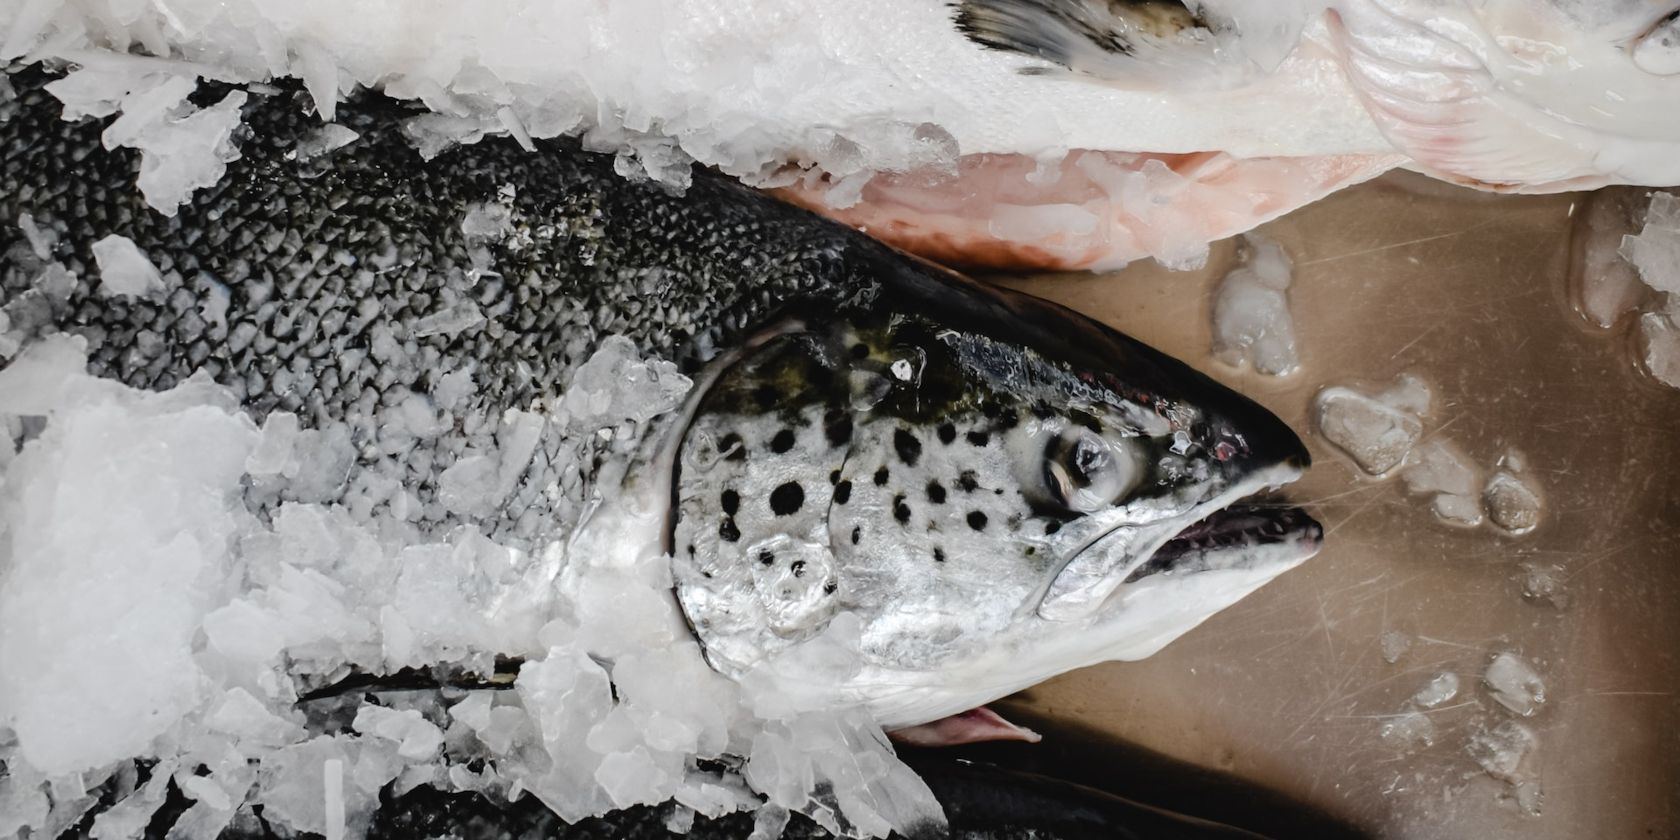 fresh salmon on ice